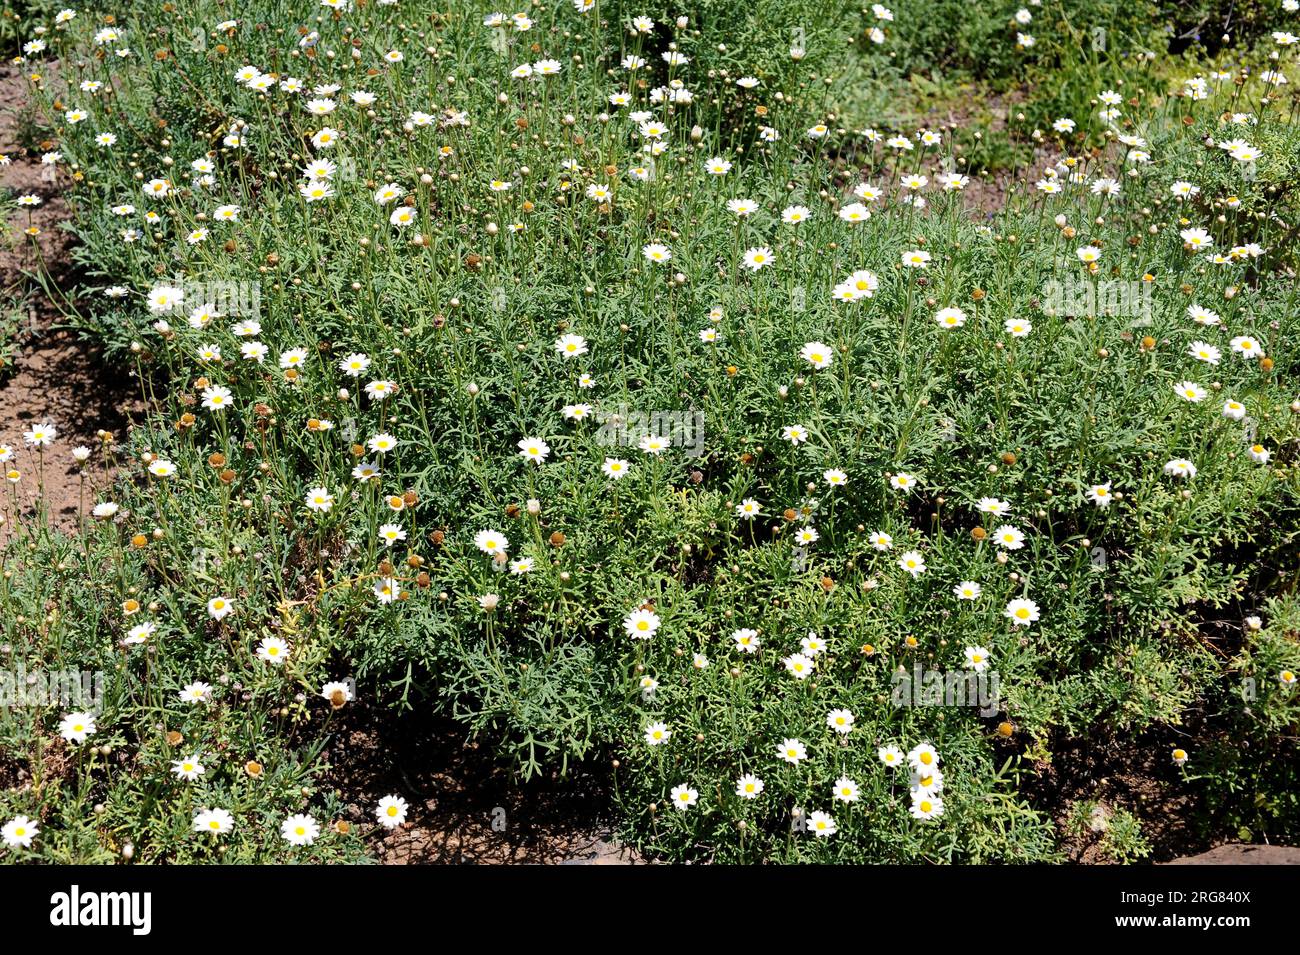 Magarza, Paris daisy or marguerite daisy (Argyranthemum frutescens) is a perennial herb native to the Canary Islands, Spain. Stock Photo